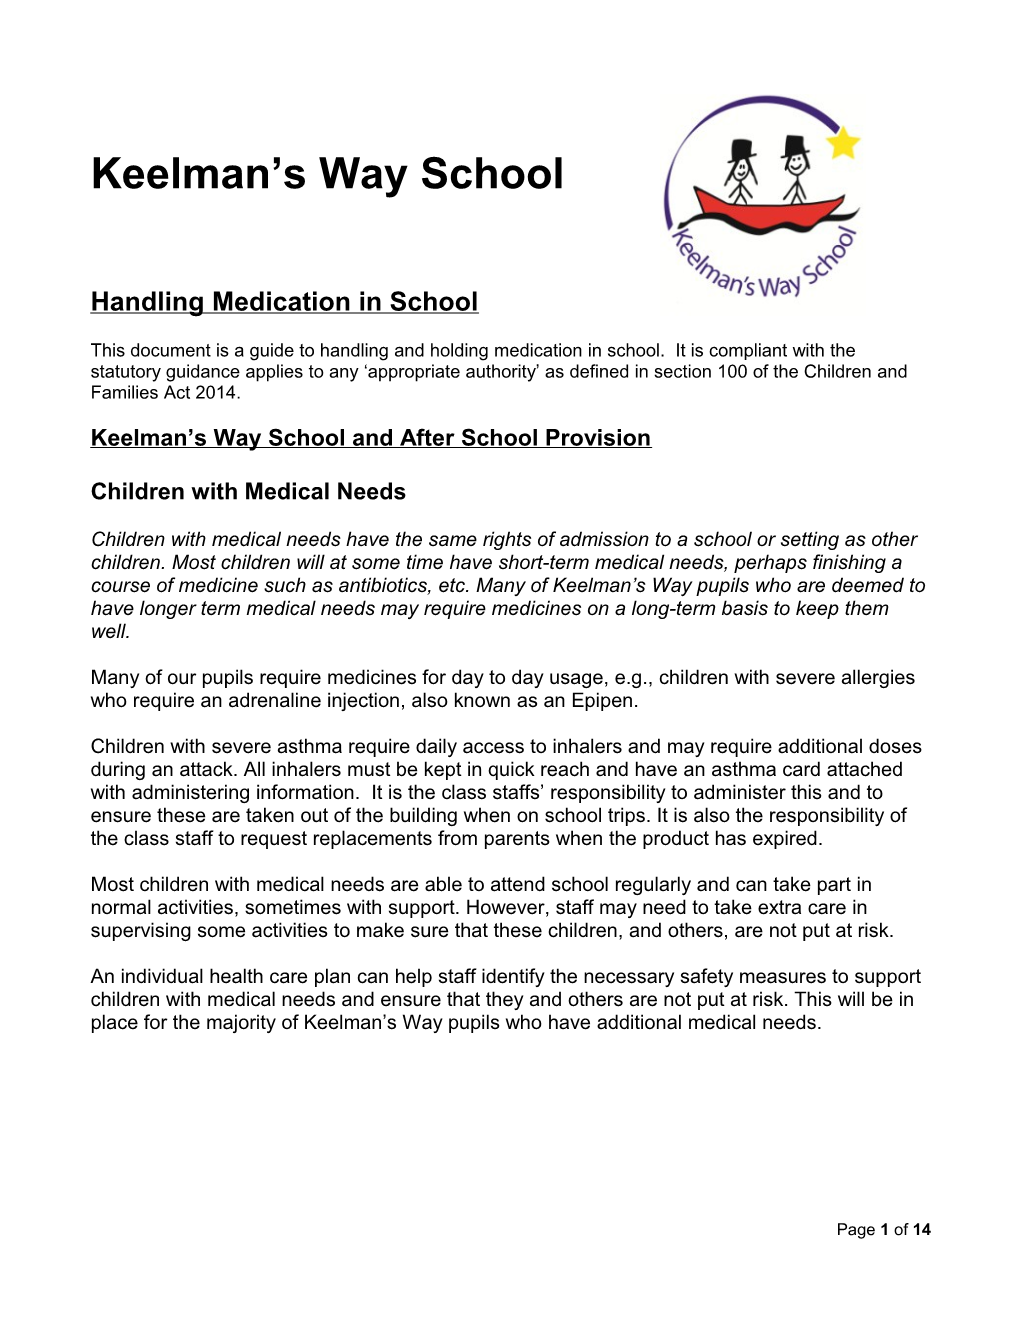 Keelman S Way School and After School Provision